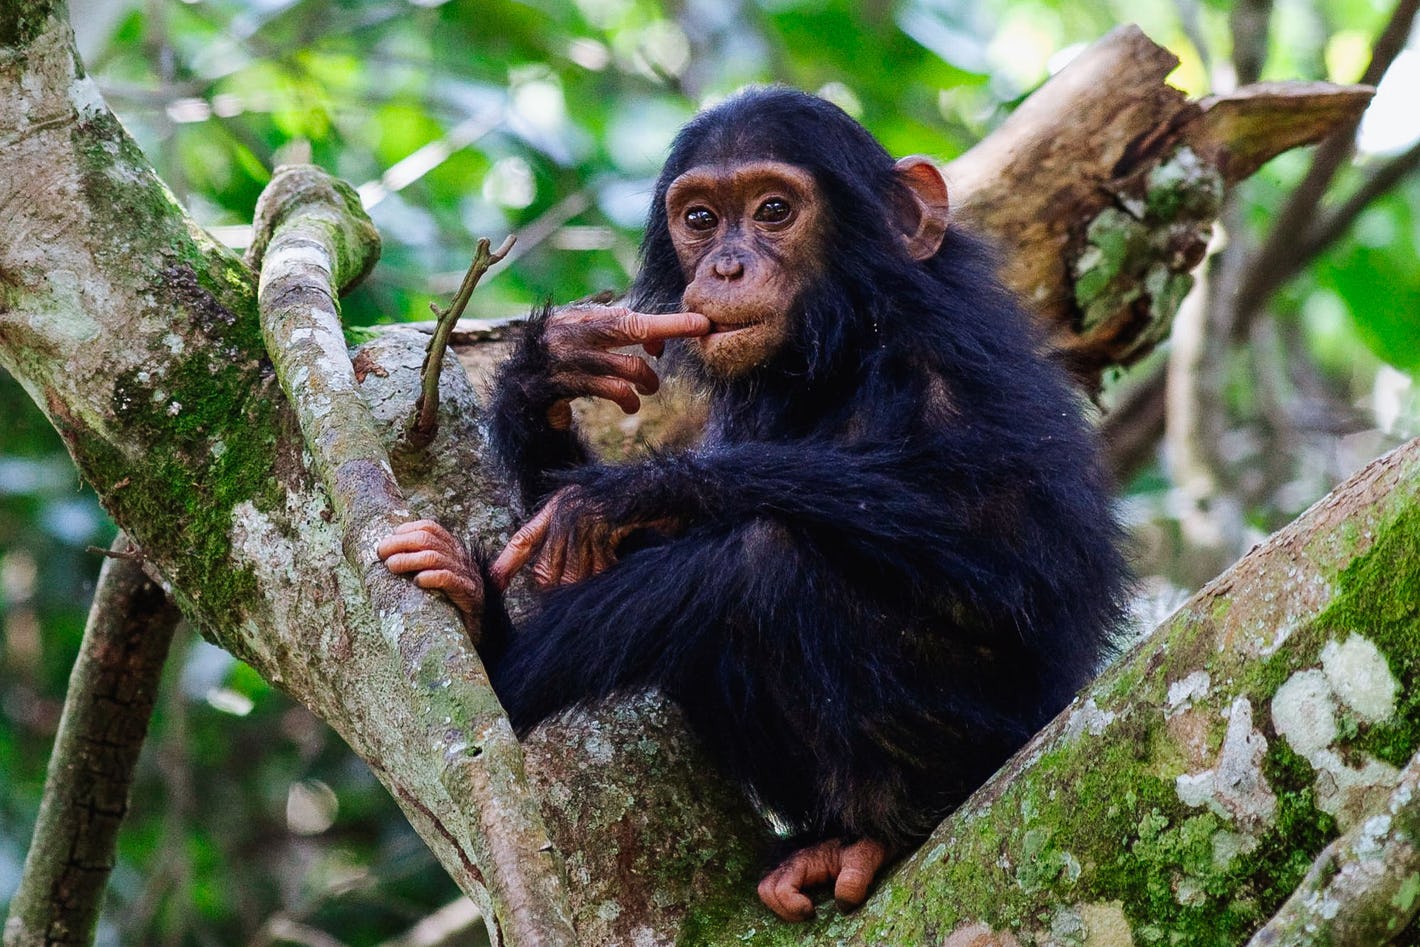 Chimpanzee Tracking Activity in Queen Elizabeth National Park